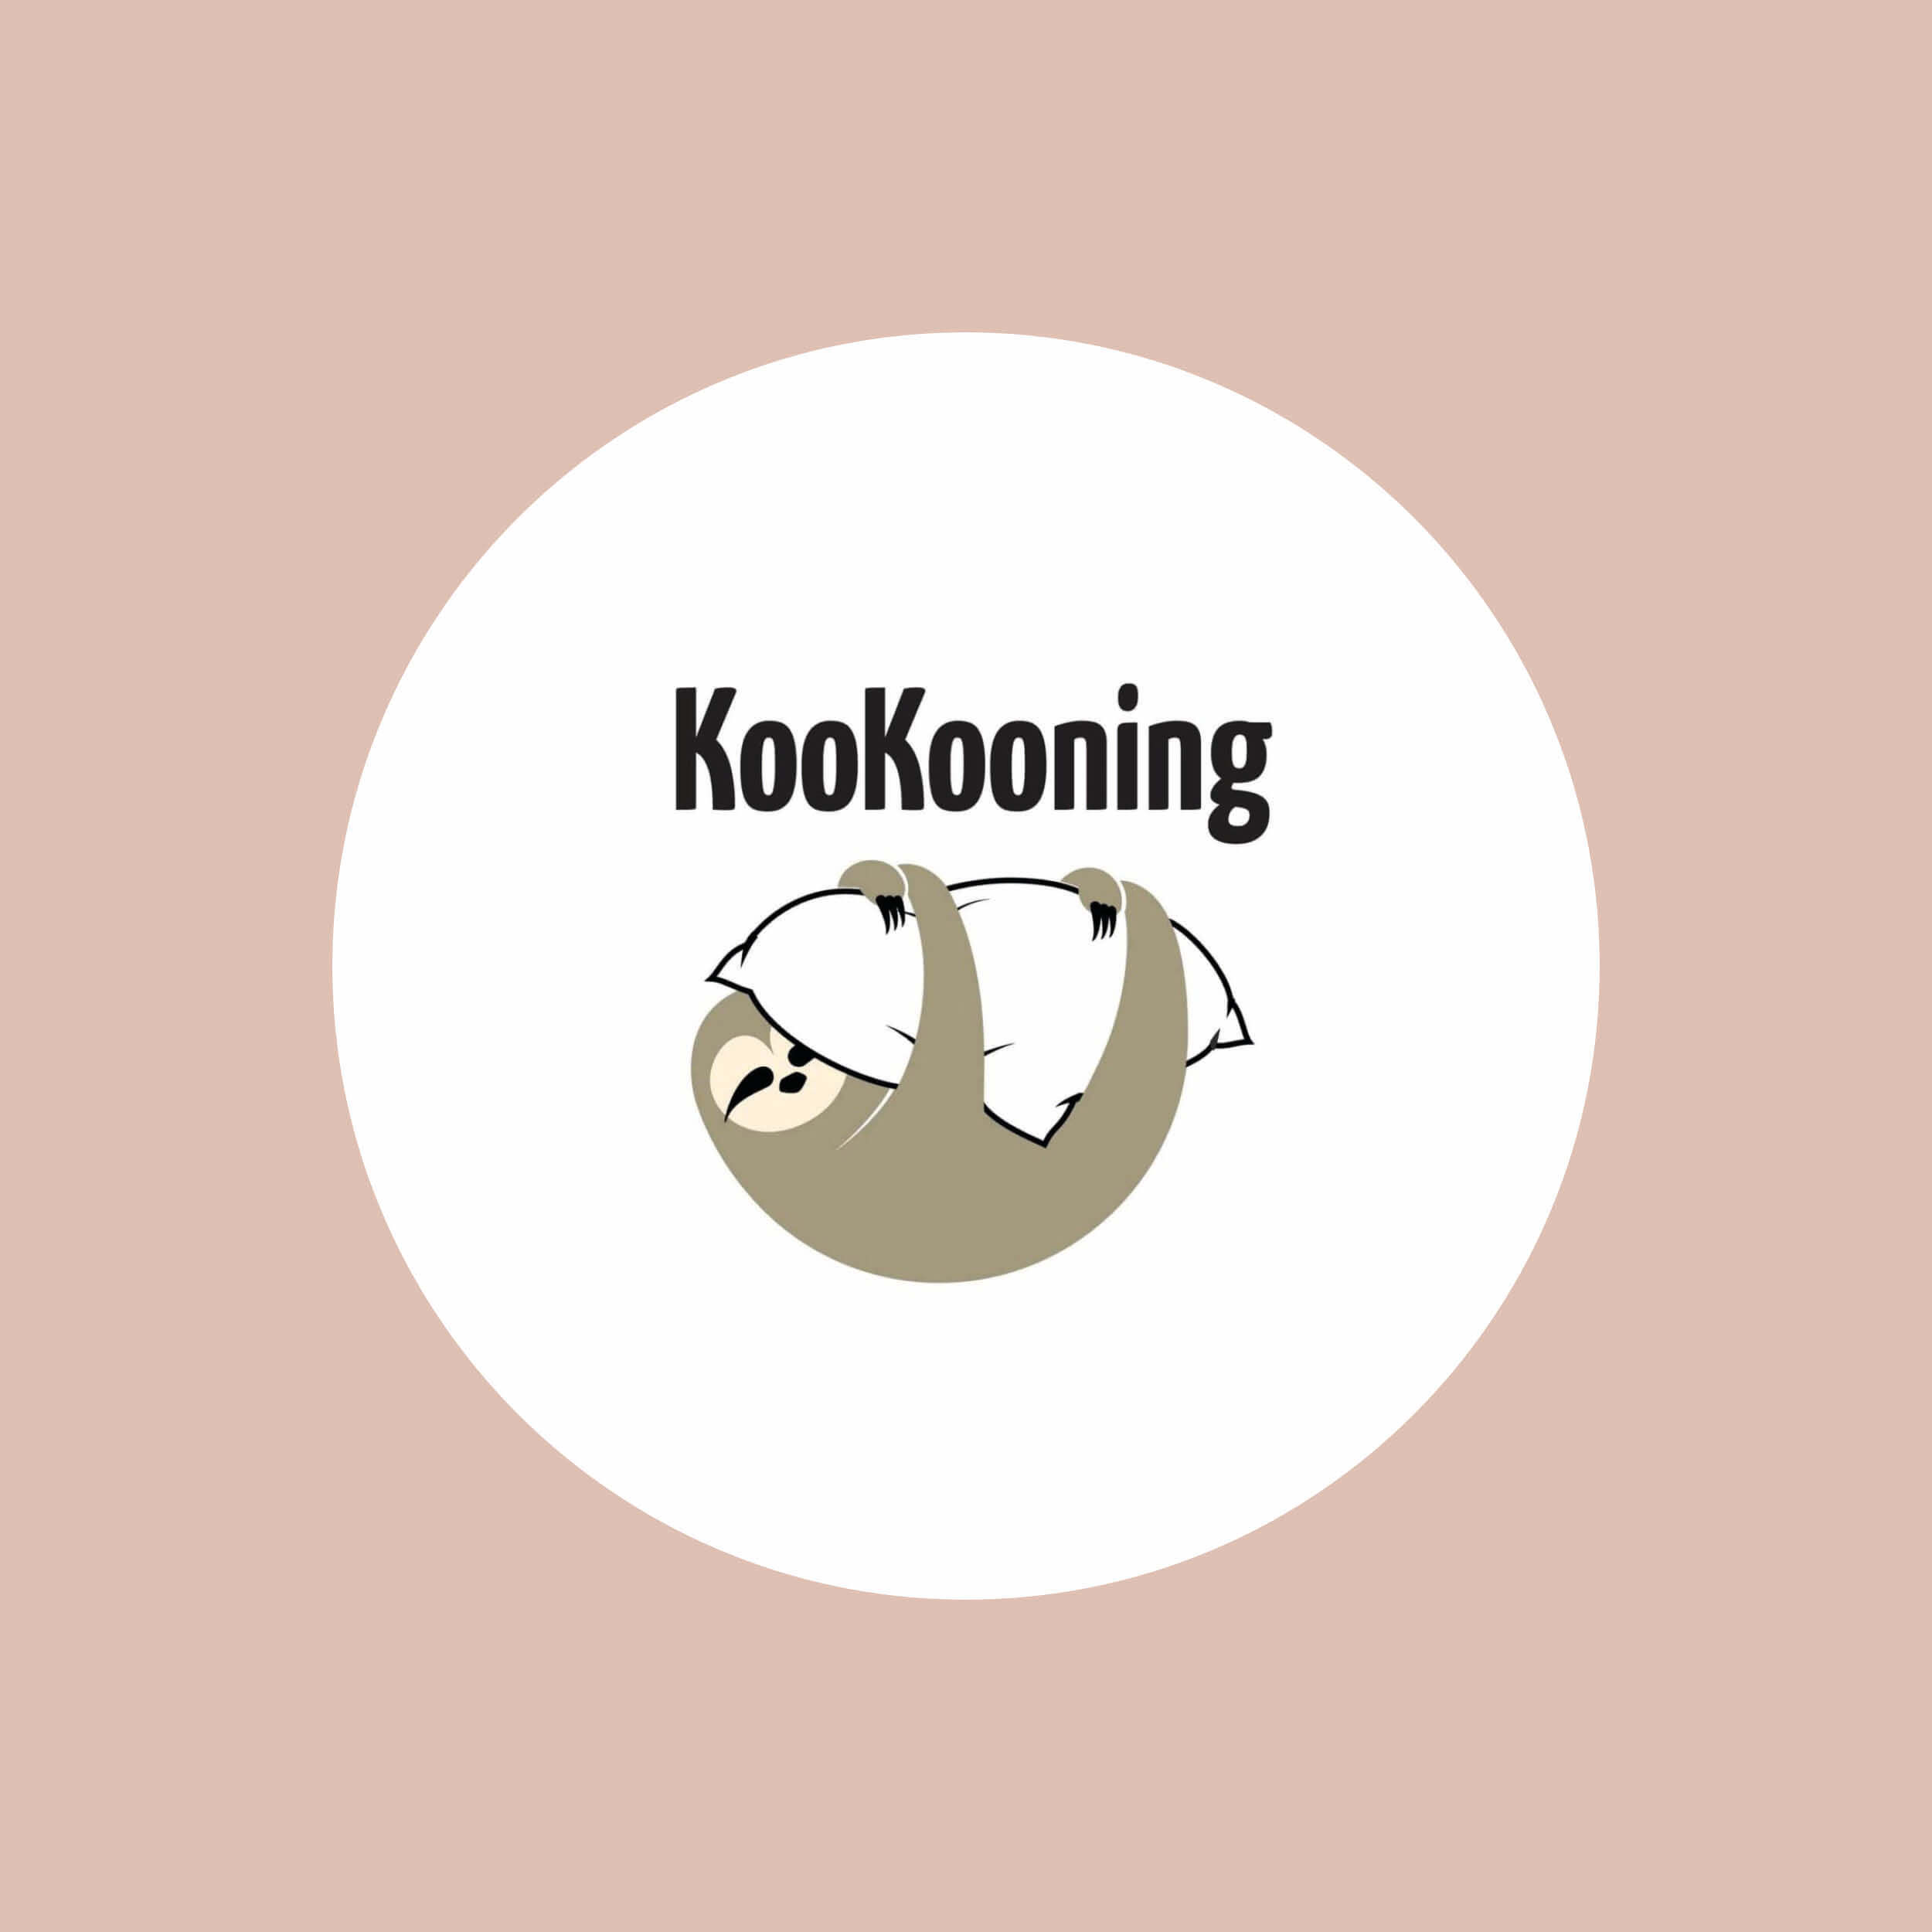 Kookooning – Une collaboration différente